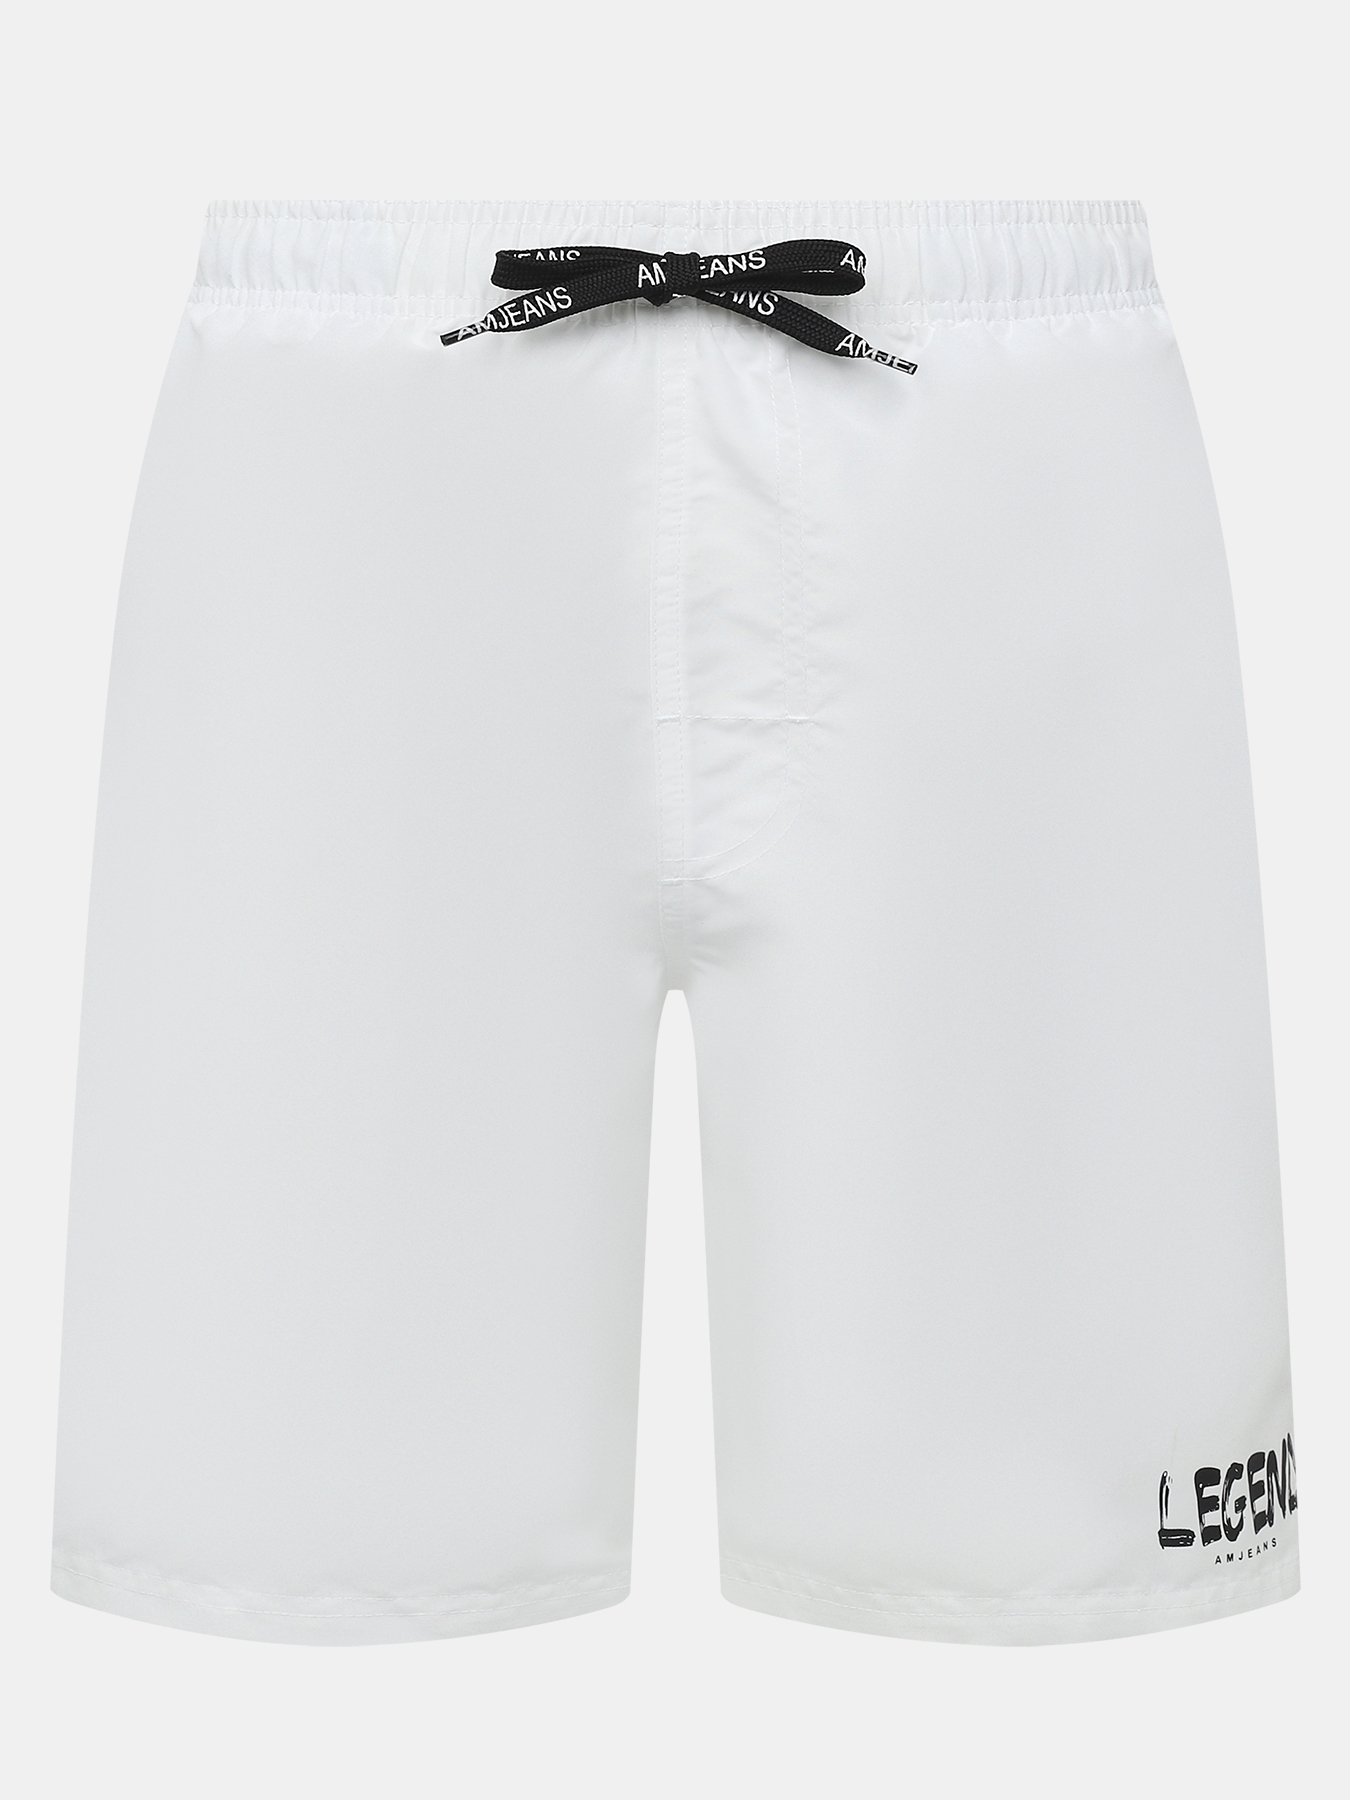 Шорты для плавания мужские Alessandro Manzoni Jeans 454098 белые 52 RU